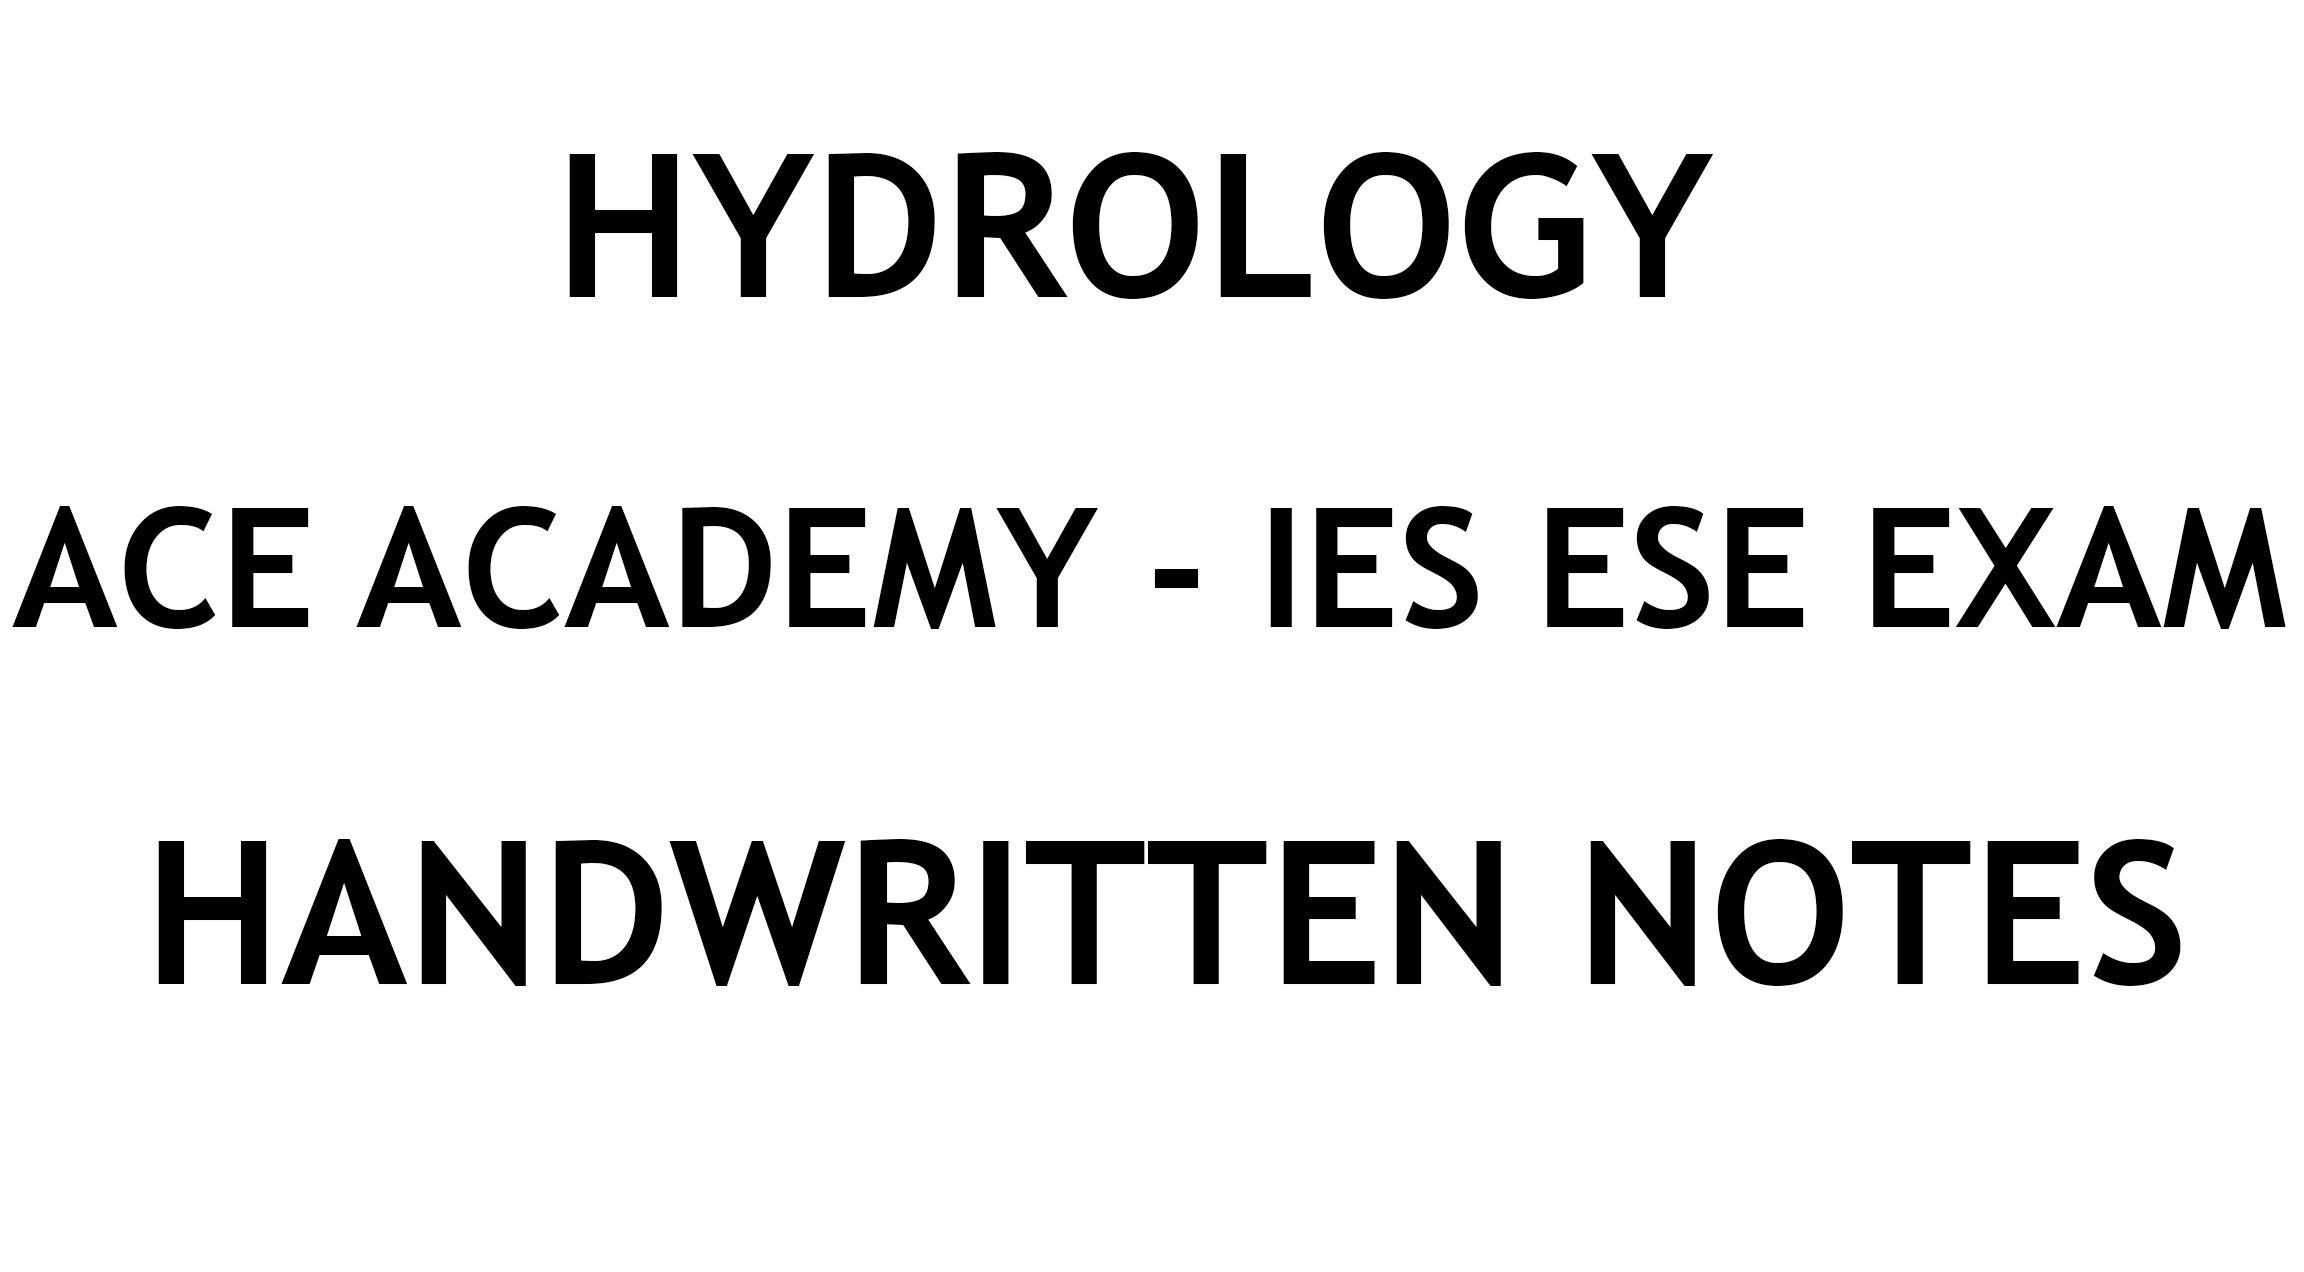 Hydrology IES ESE Ace Academy Handwritten Classroom Notes PDF